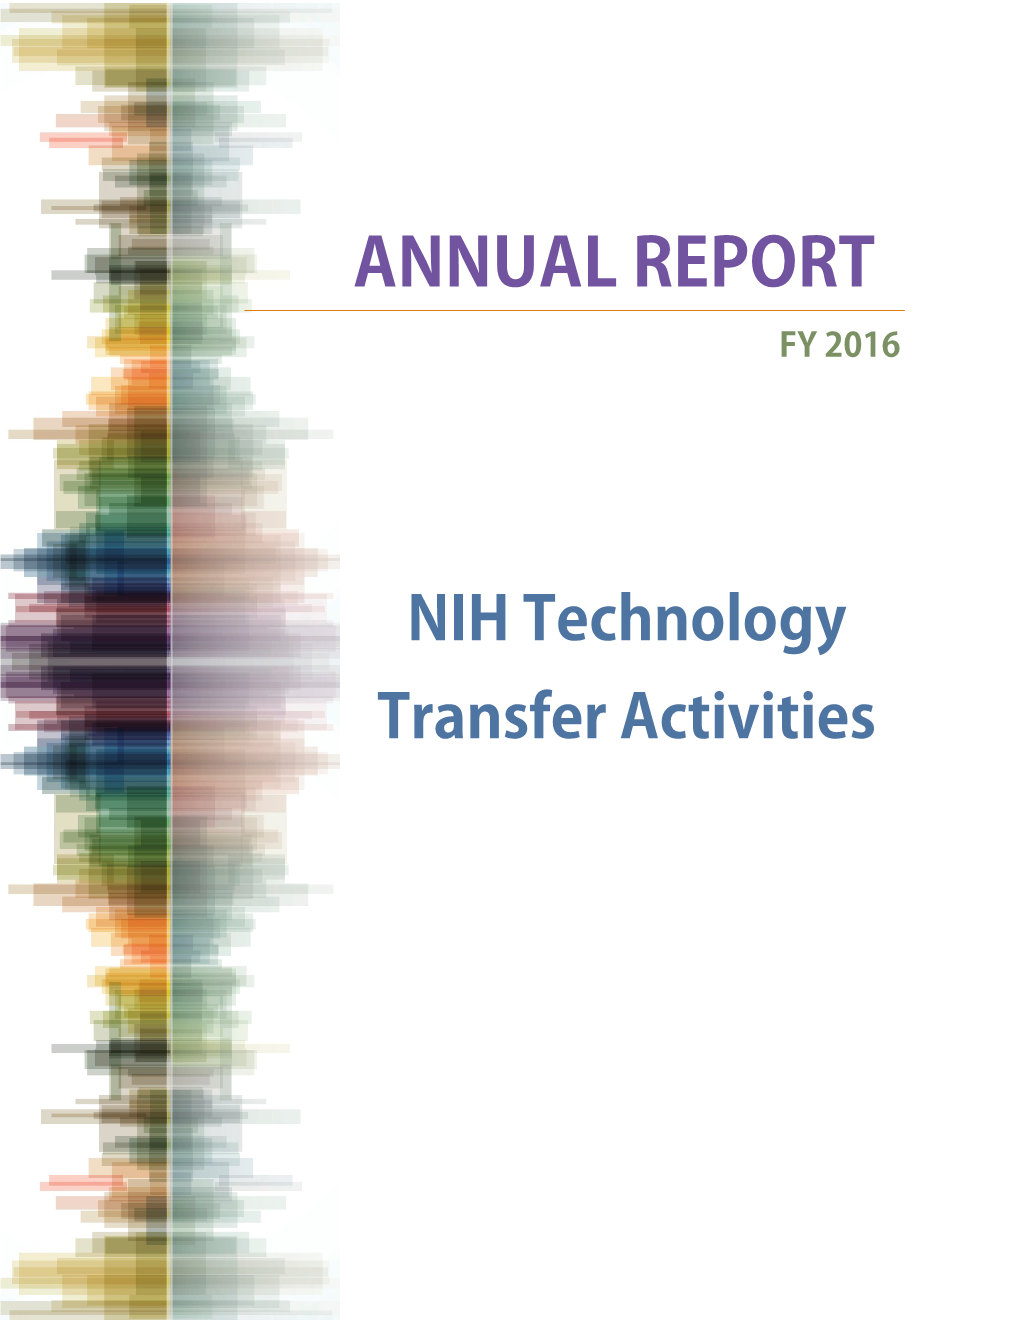 NIH Technology Transfer Activites